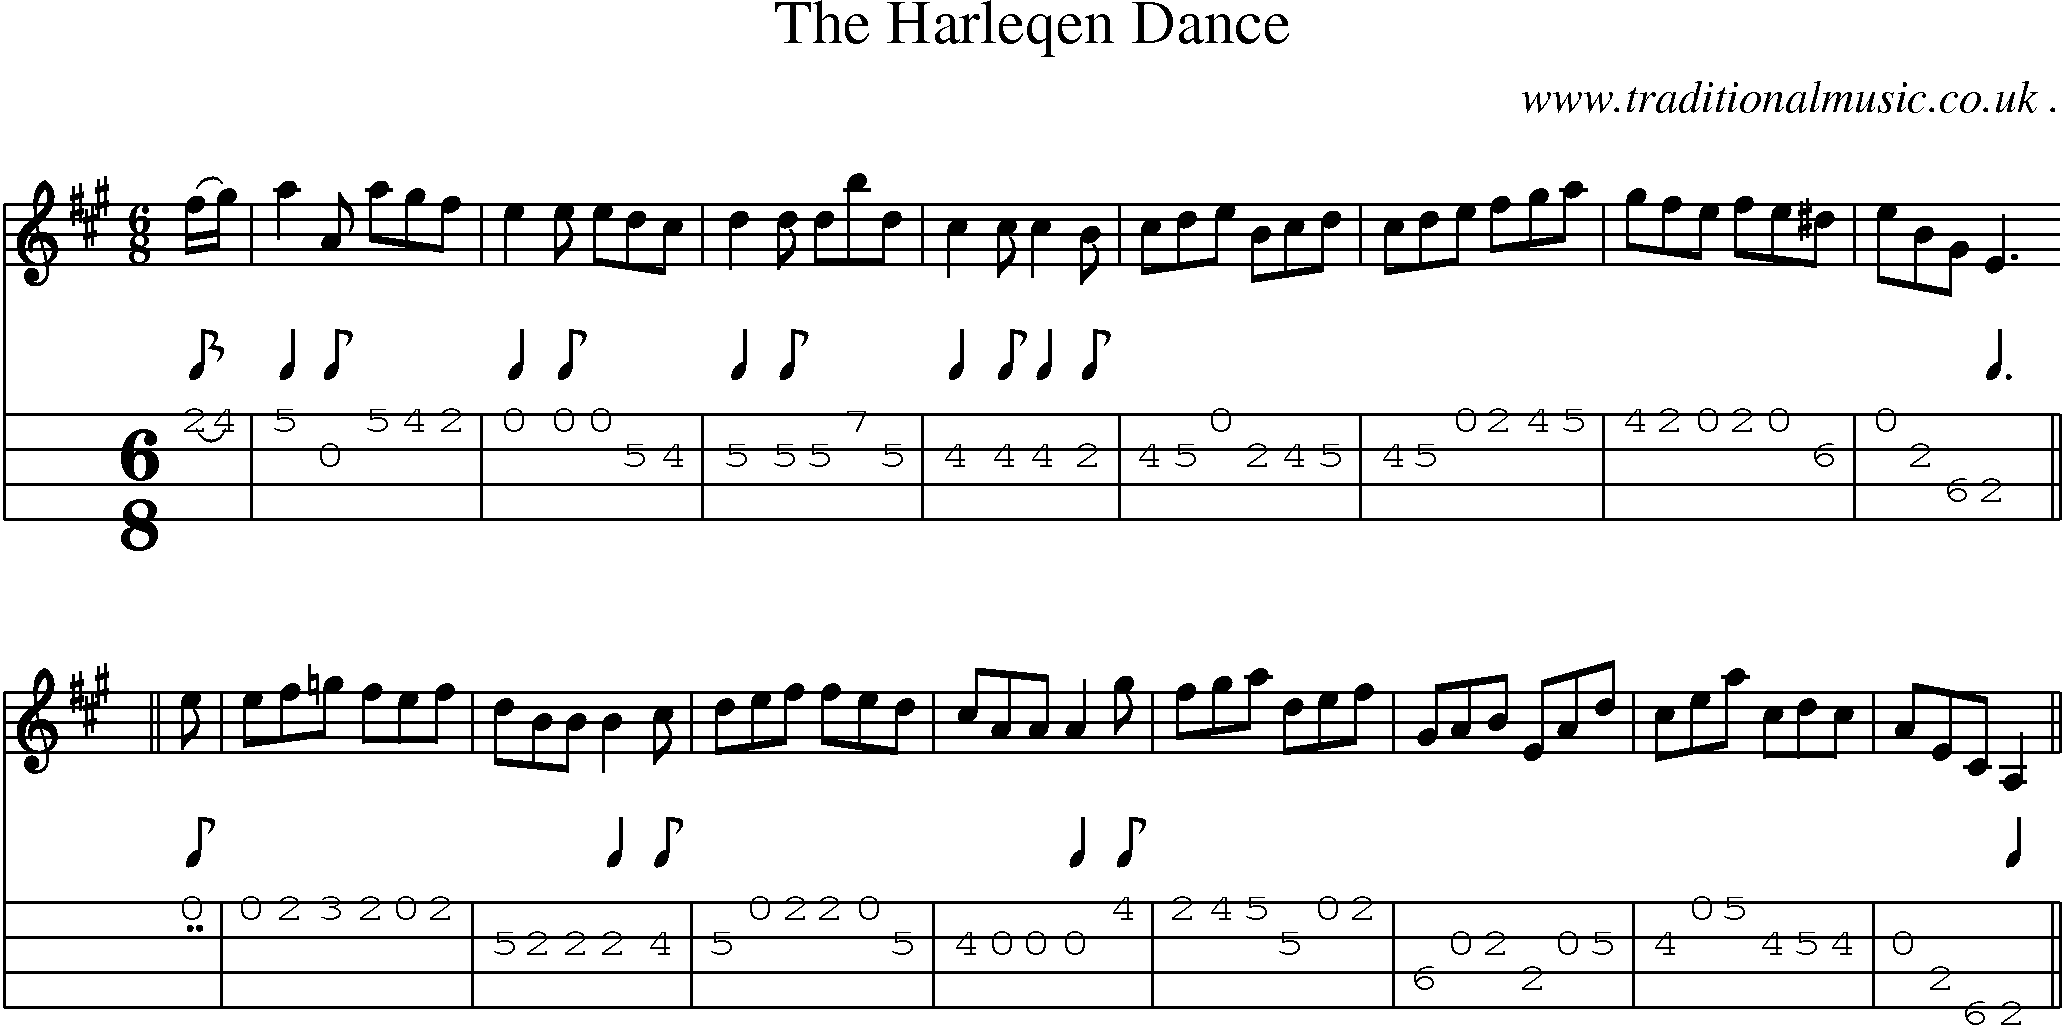 Sheet-Music and Mandolin Tabs for The Harleqen Dance